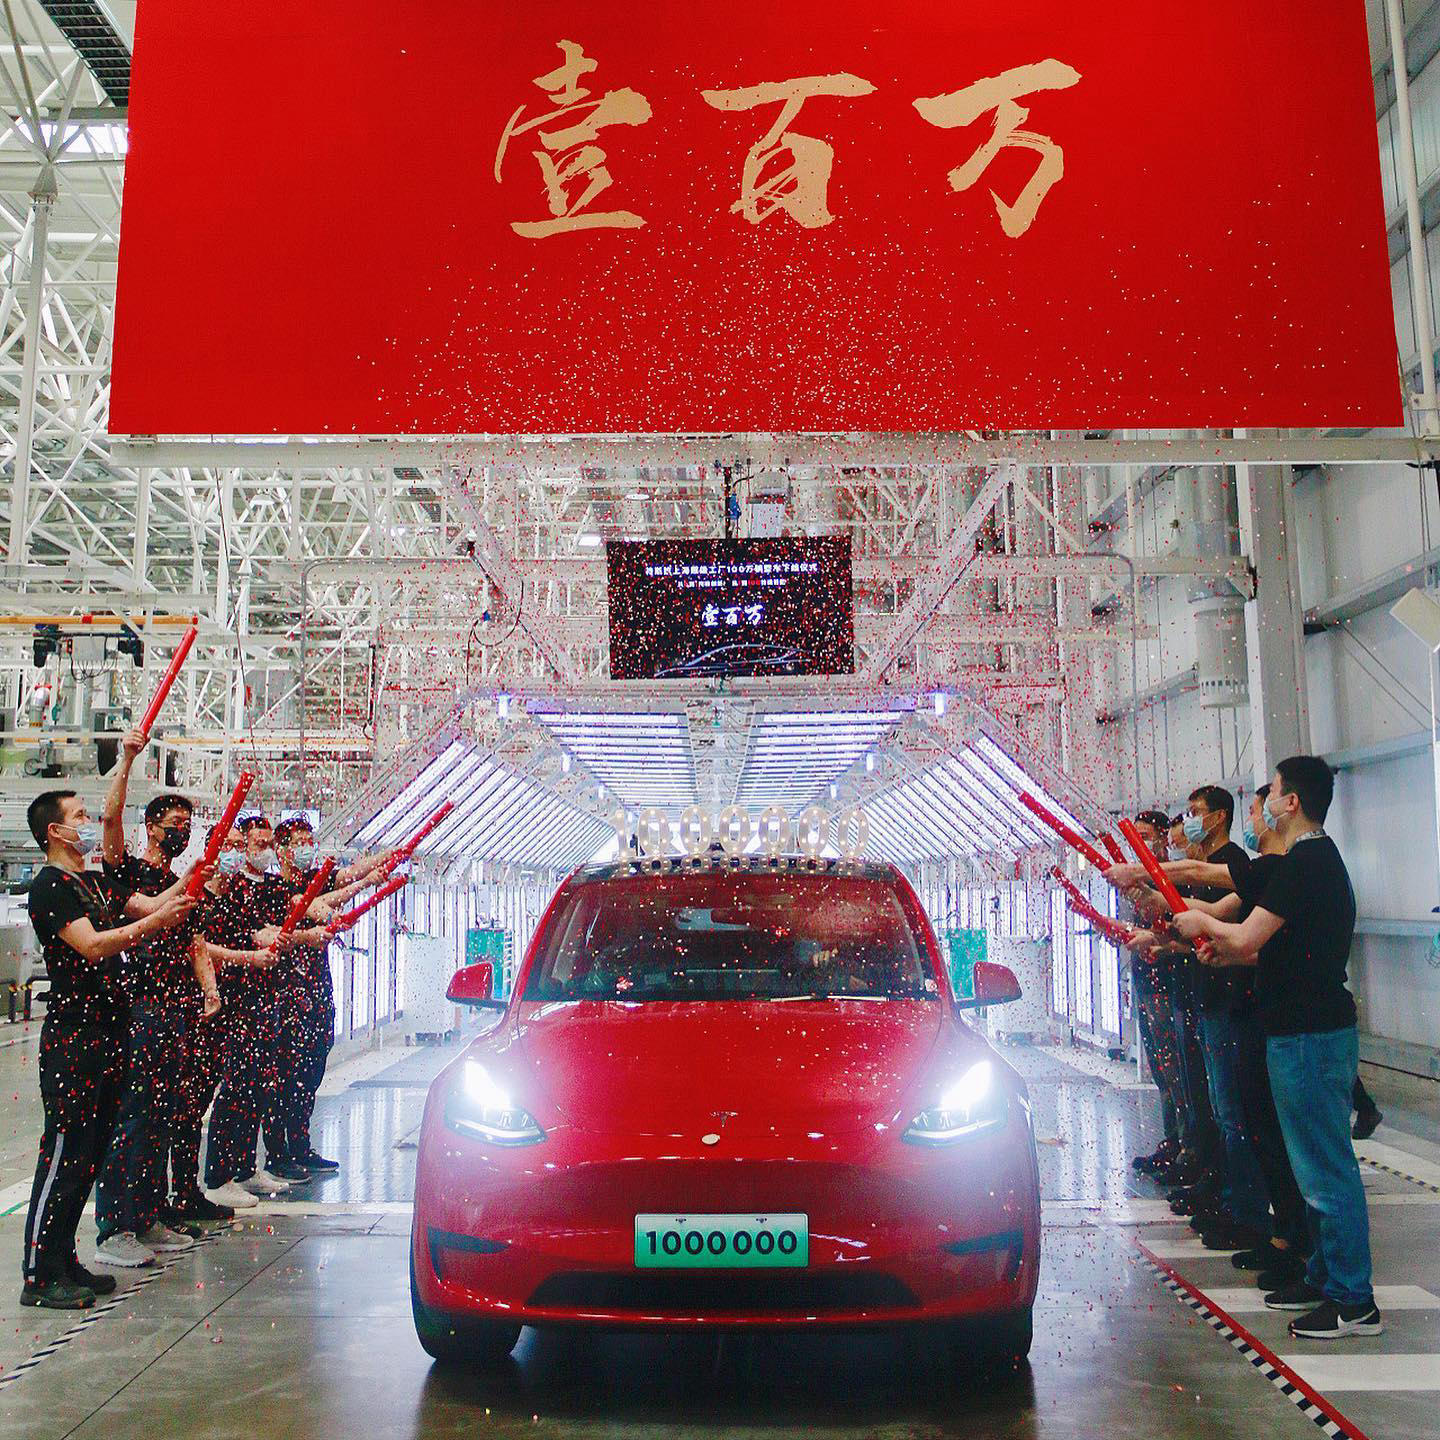 Tesla - Giga Shanghai made their 1 millionth car